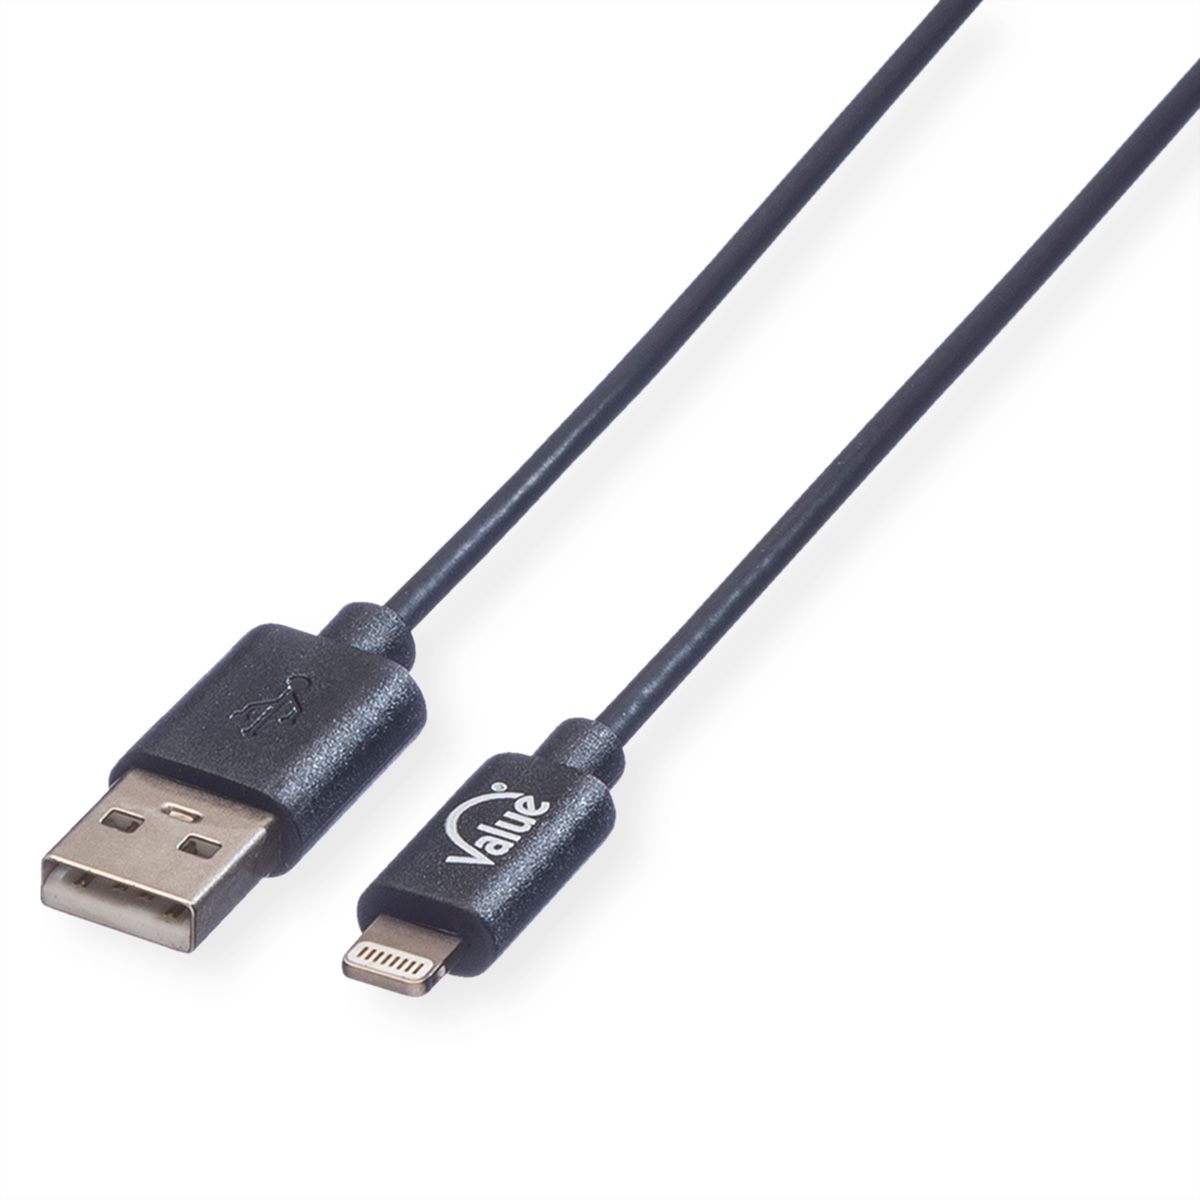 vant Afskedige Bandit VALUE Lightning to USB Cable for iPhone, iPod, iPad, 1 m - SECOMP  International AG